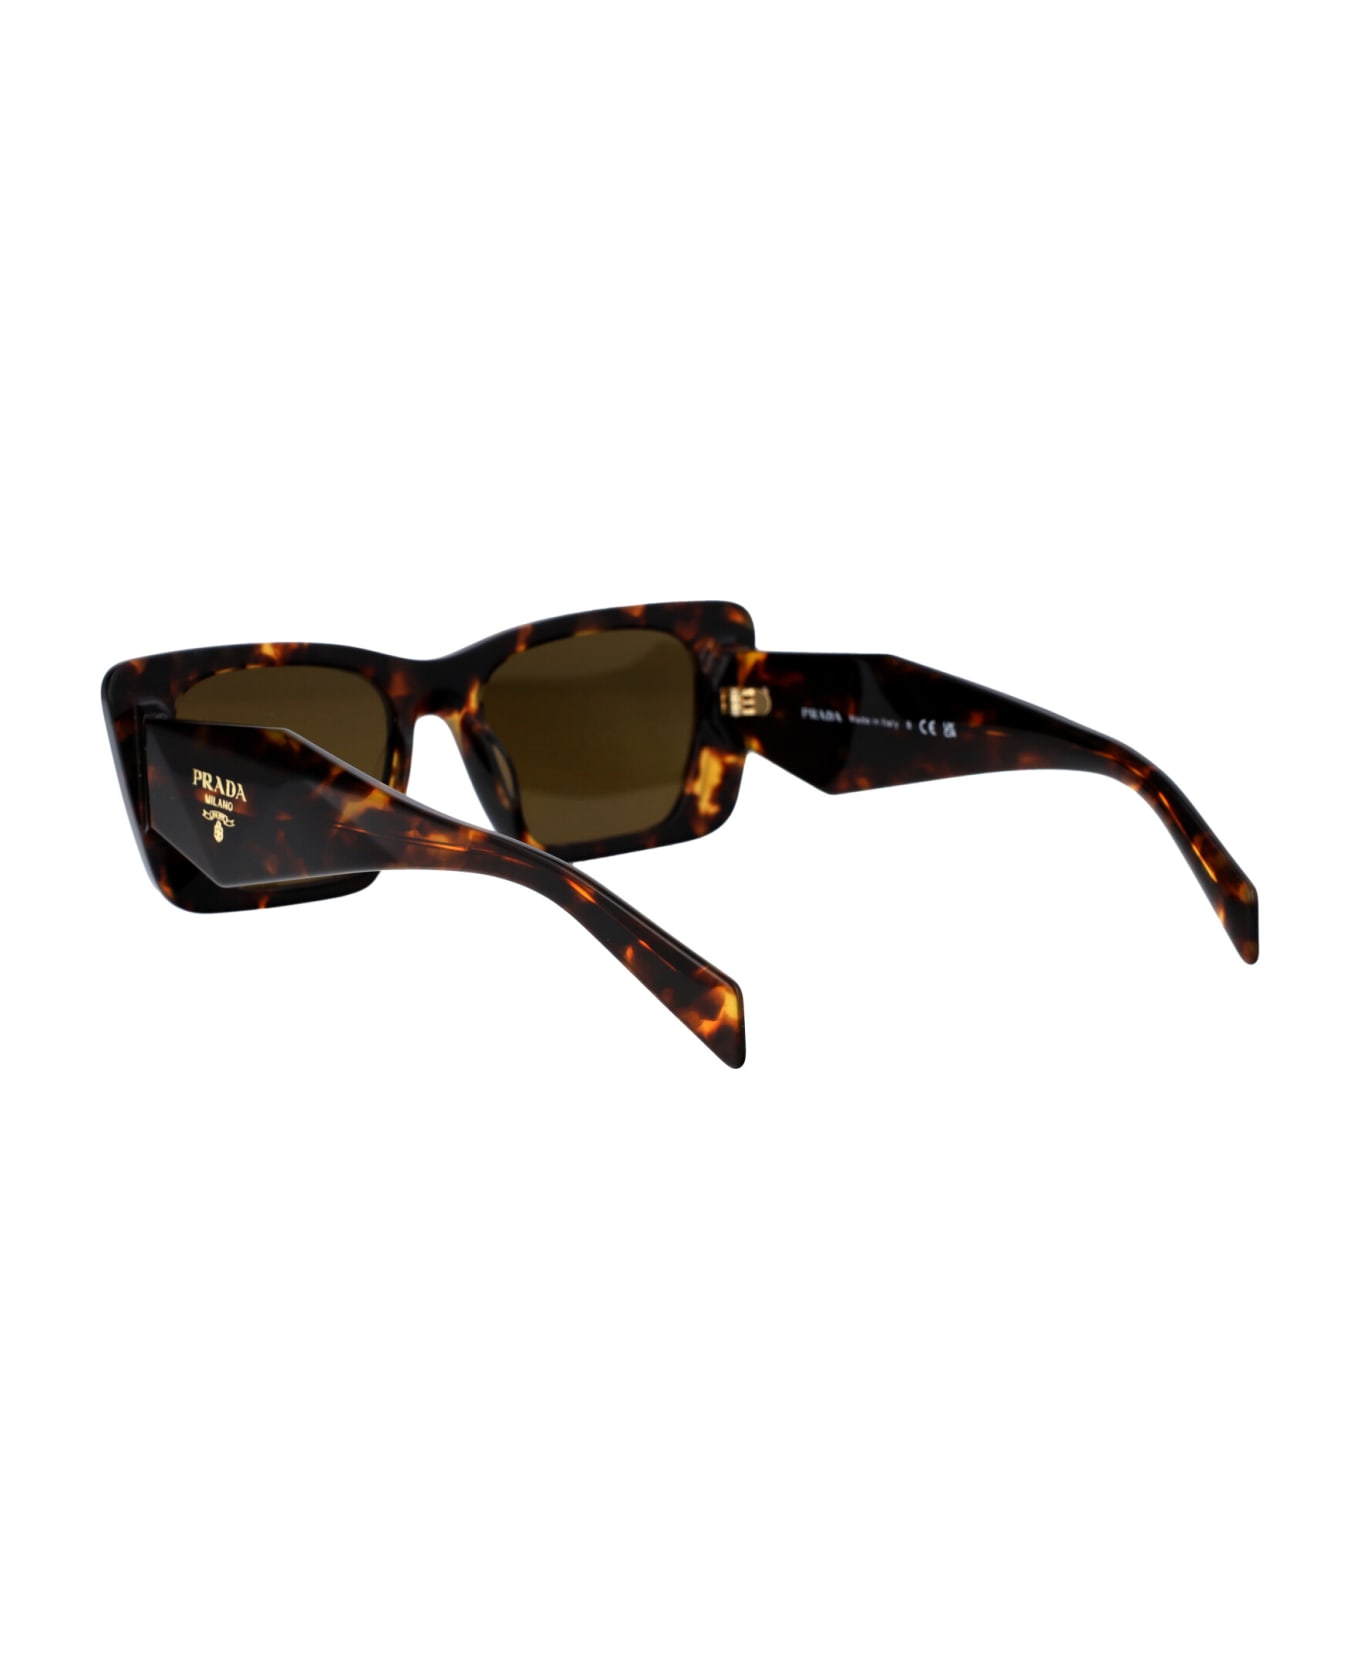 Prada Eyewear 0pr 08ys Sunglasses - VAU01T Honey Tortoise